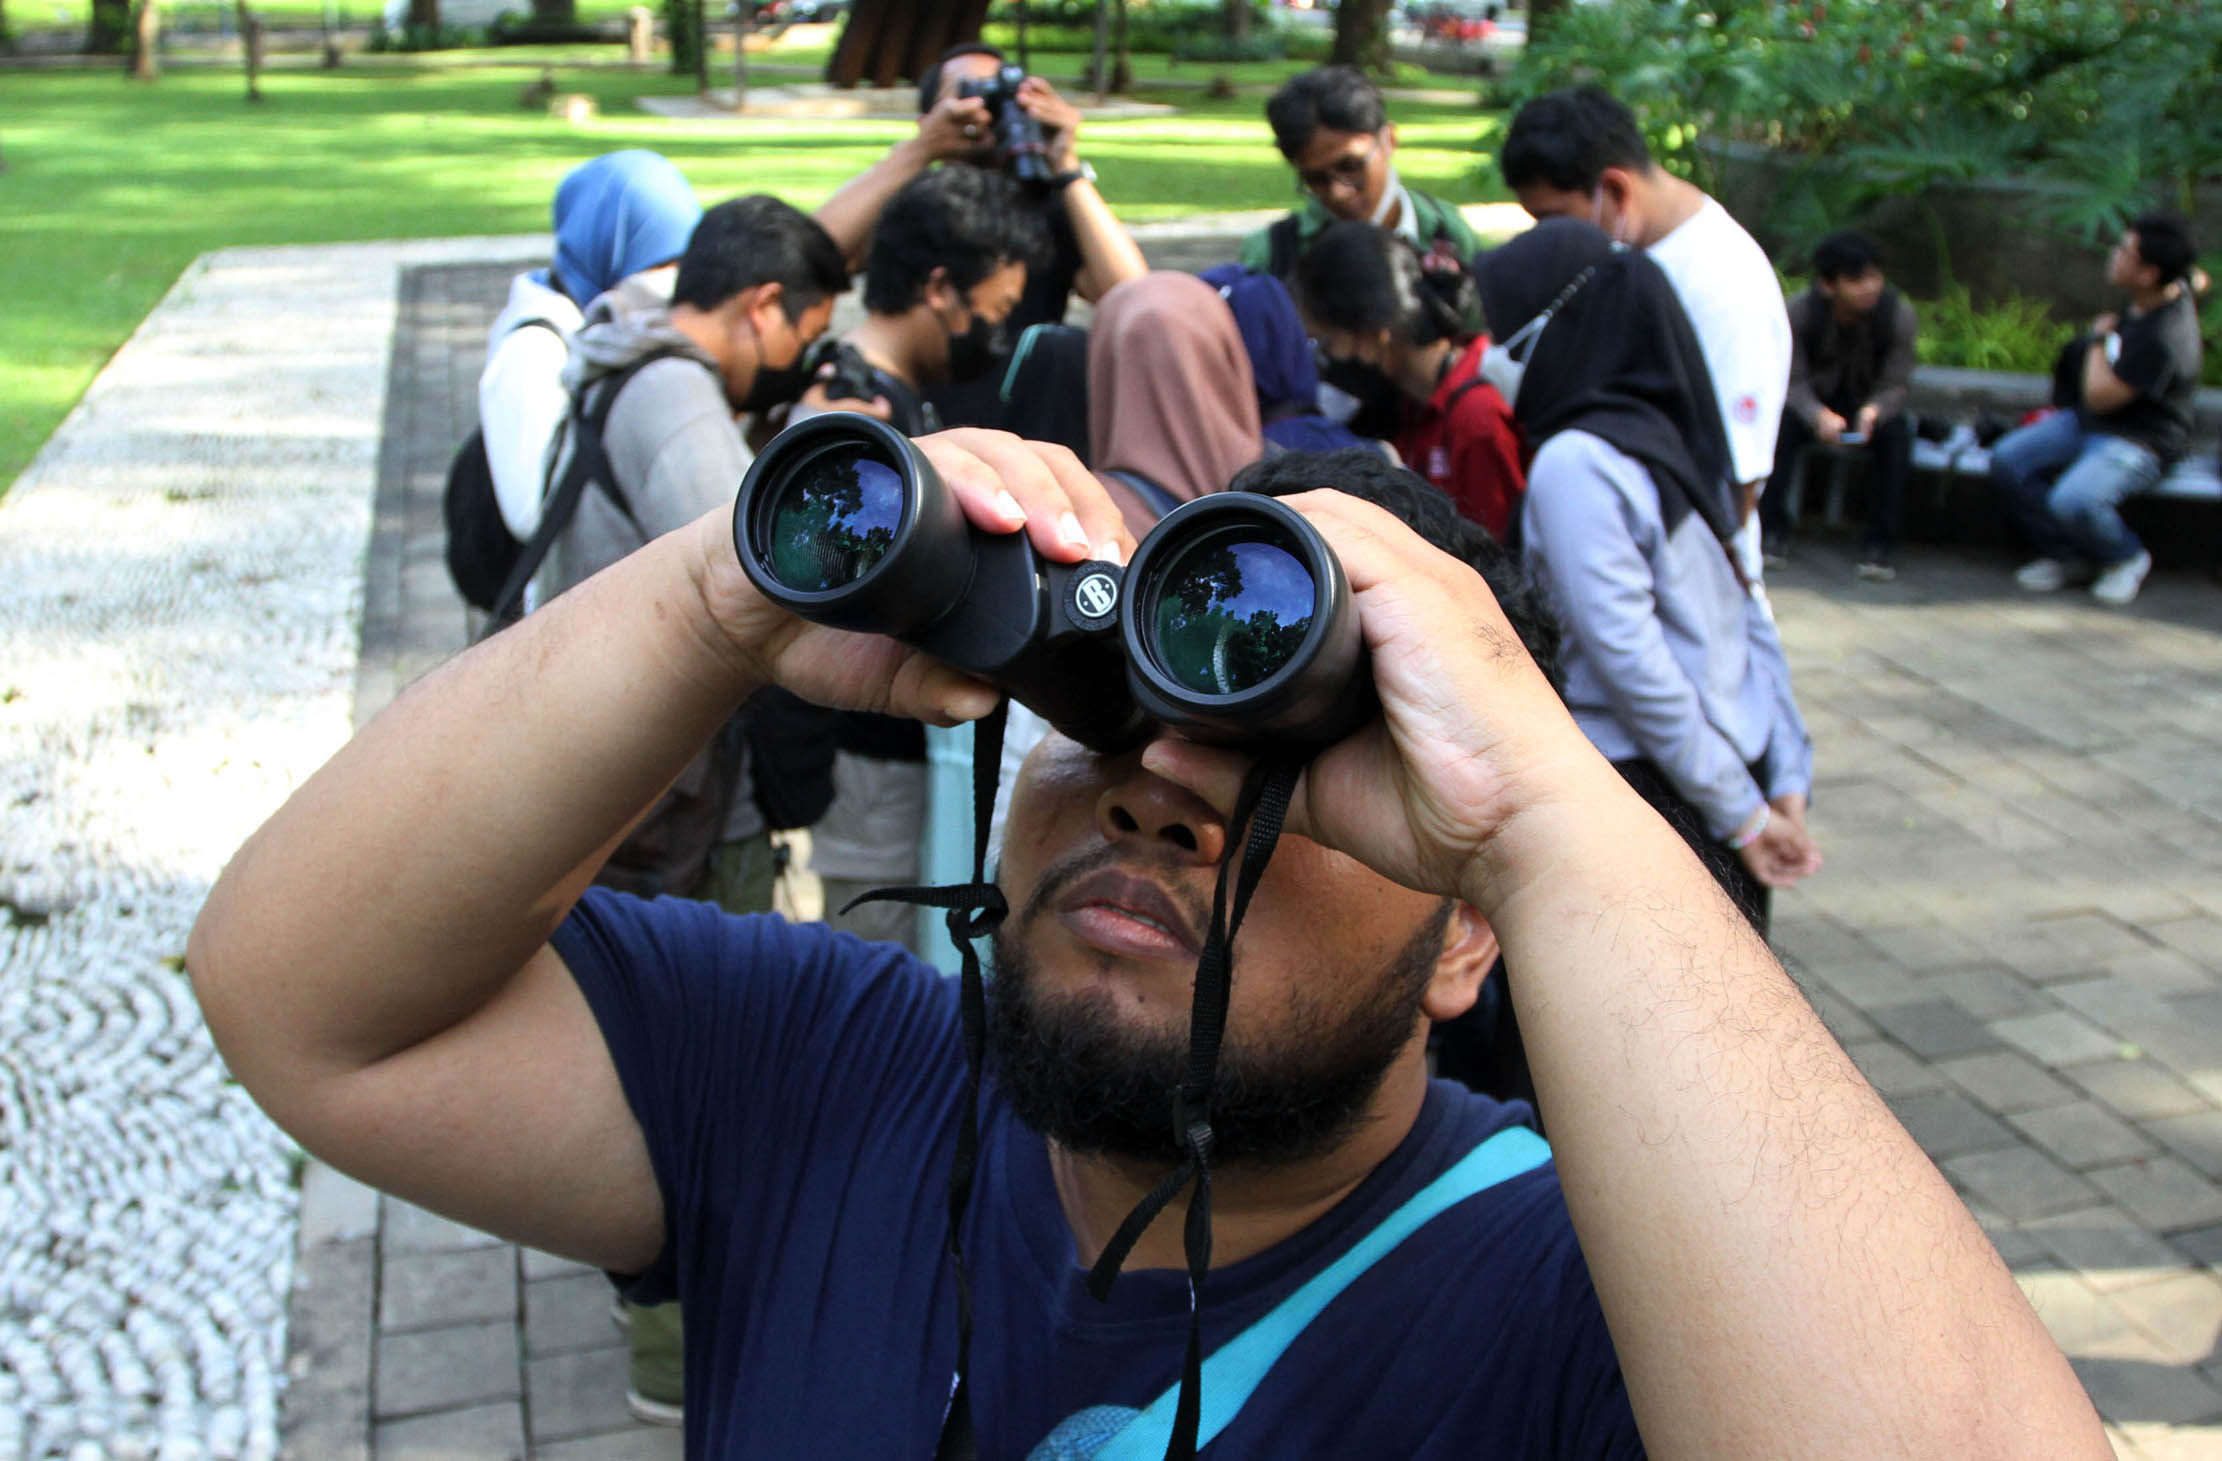 Biodiversity Warriors Yayasan KEHATI bersama perwakilan mahasiswa dari sejumlah kampus di Jabodetabek menyelenggarakan kegiatan pengamatan keanekaraman hayati di kawasan Taman Surapati Jakarta, untuk memperingati Hari Keanekaragaman Hayati Sedunia yang jatuh pada 22 Mei 2022.Foto : Panji Asmoro/TrenAsia